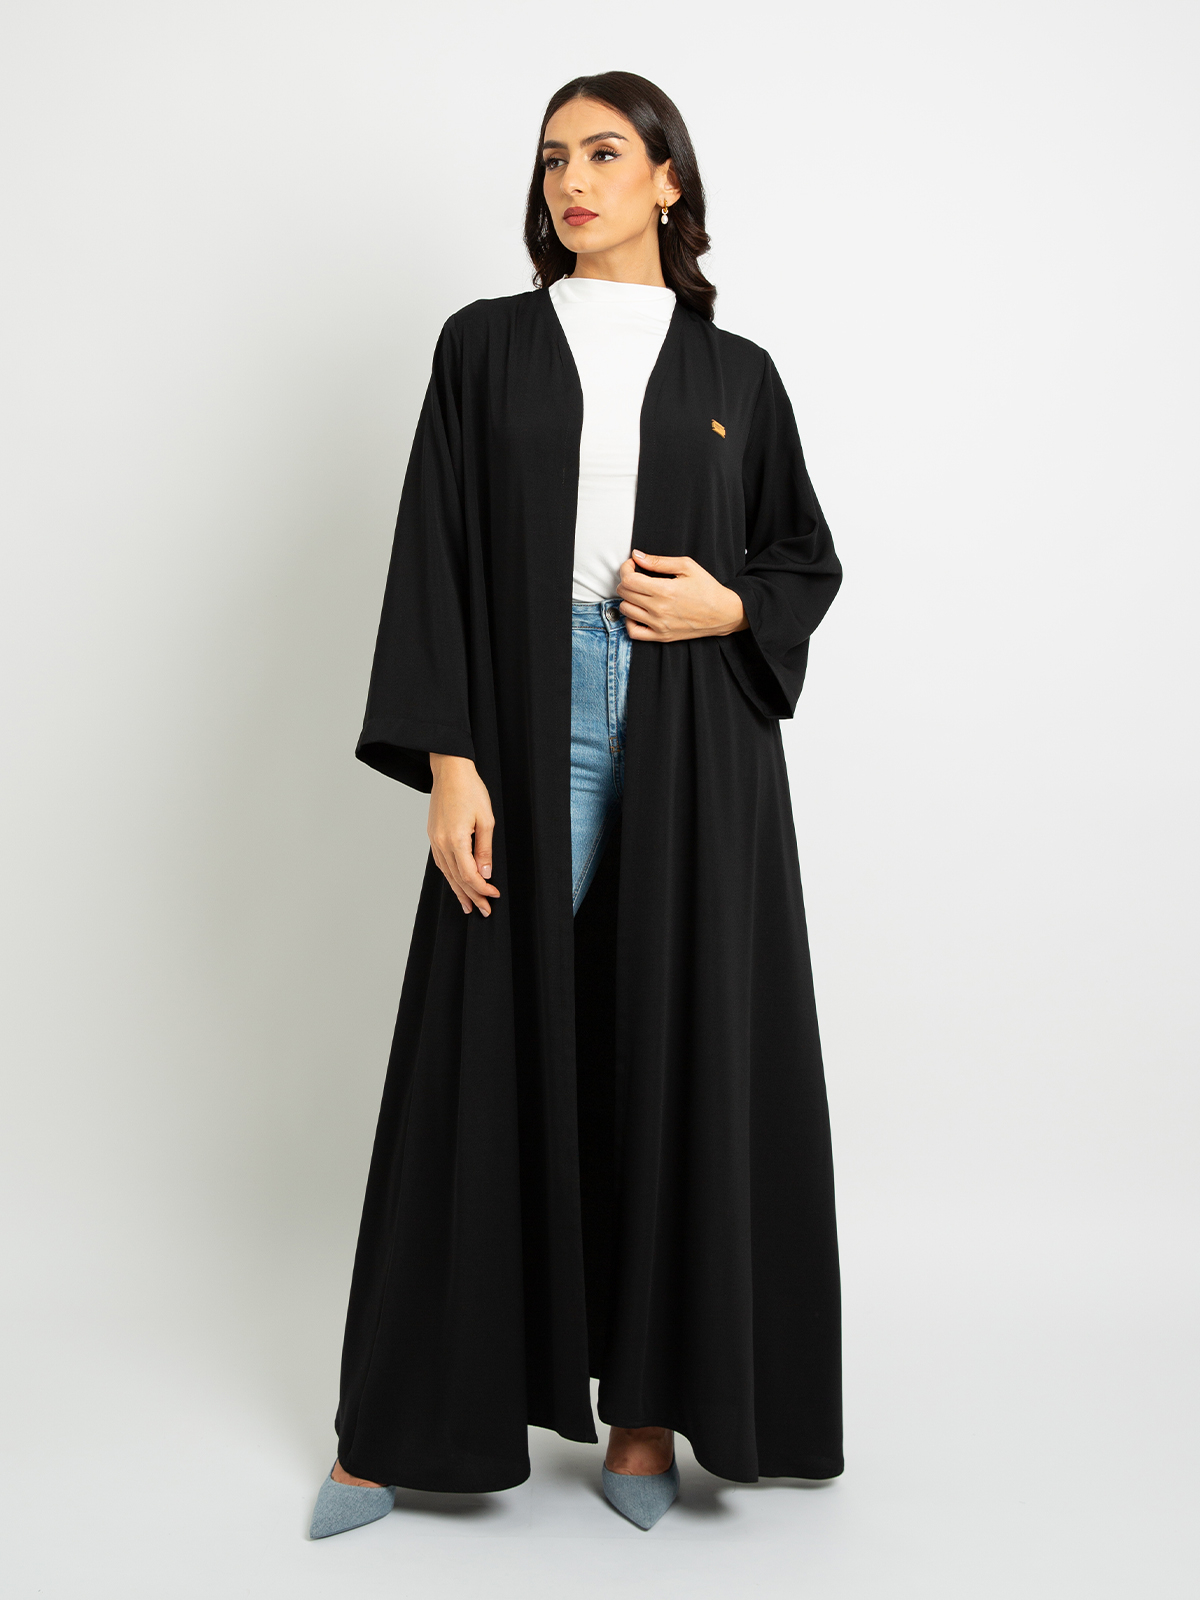 Black - A Cut Long Open Half Cloche Abaya in Crepe Fabric